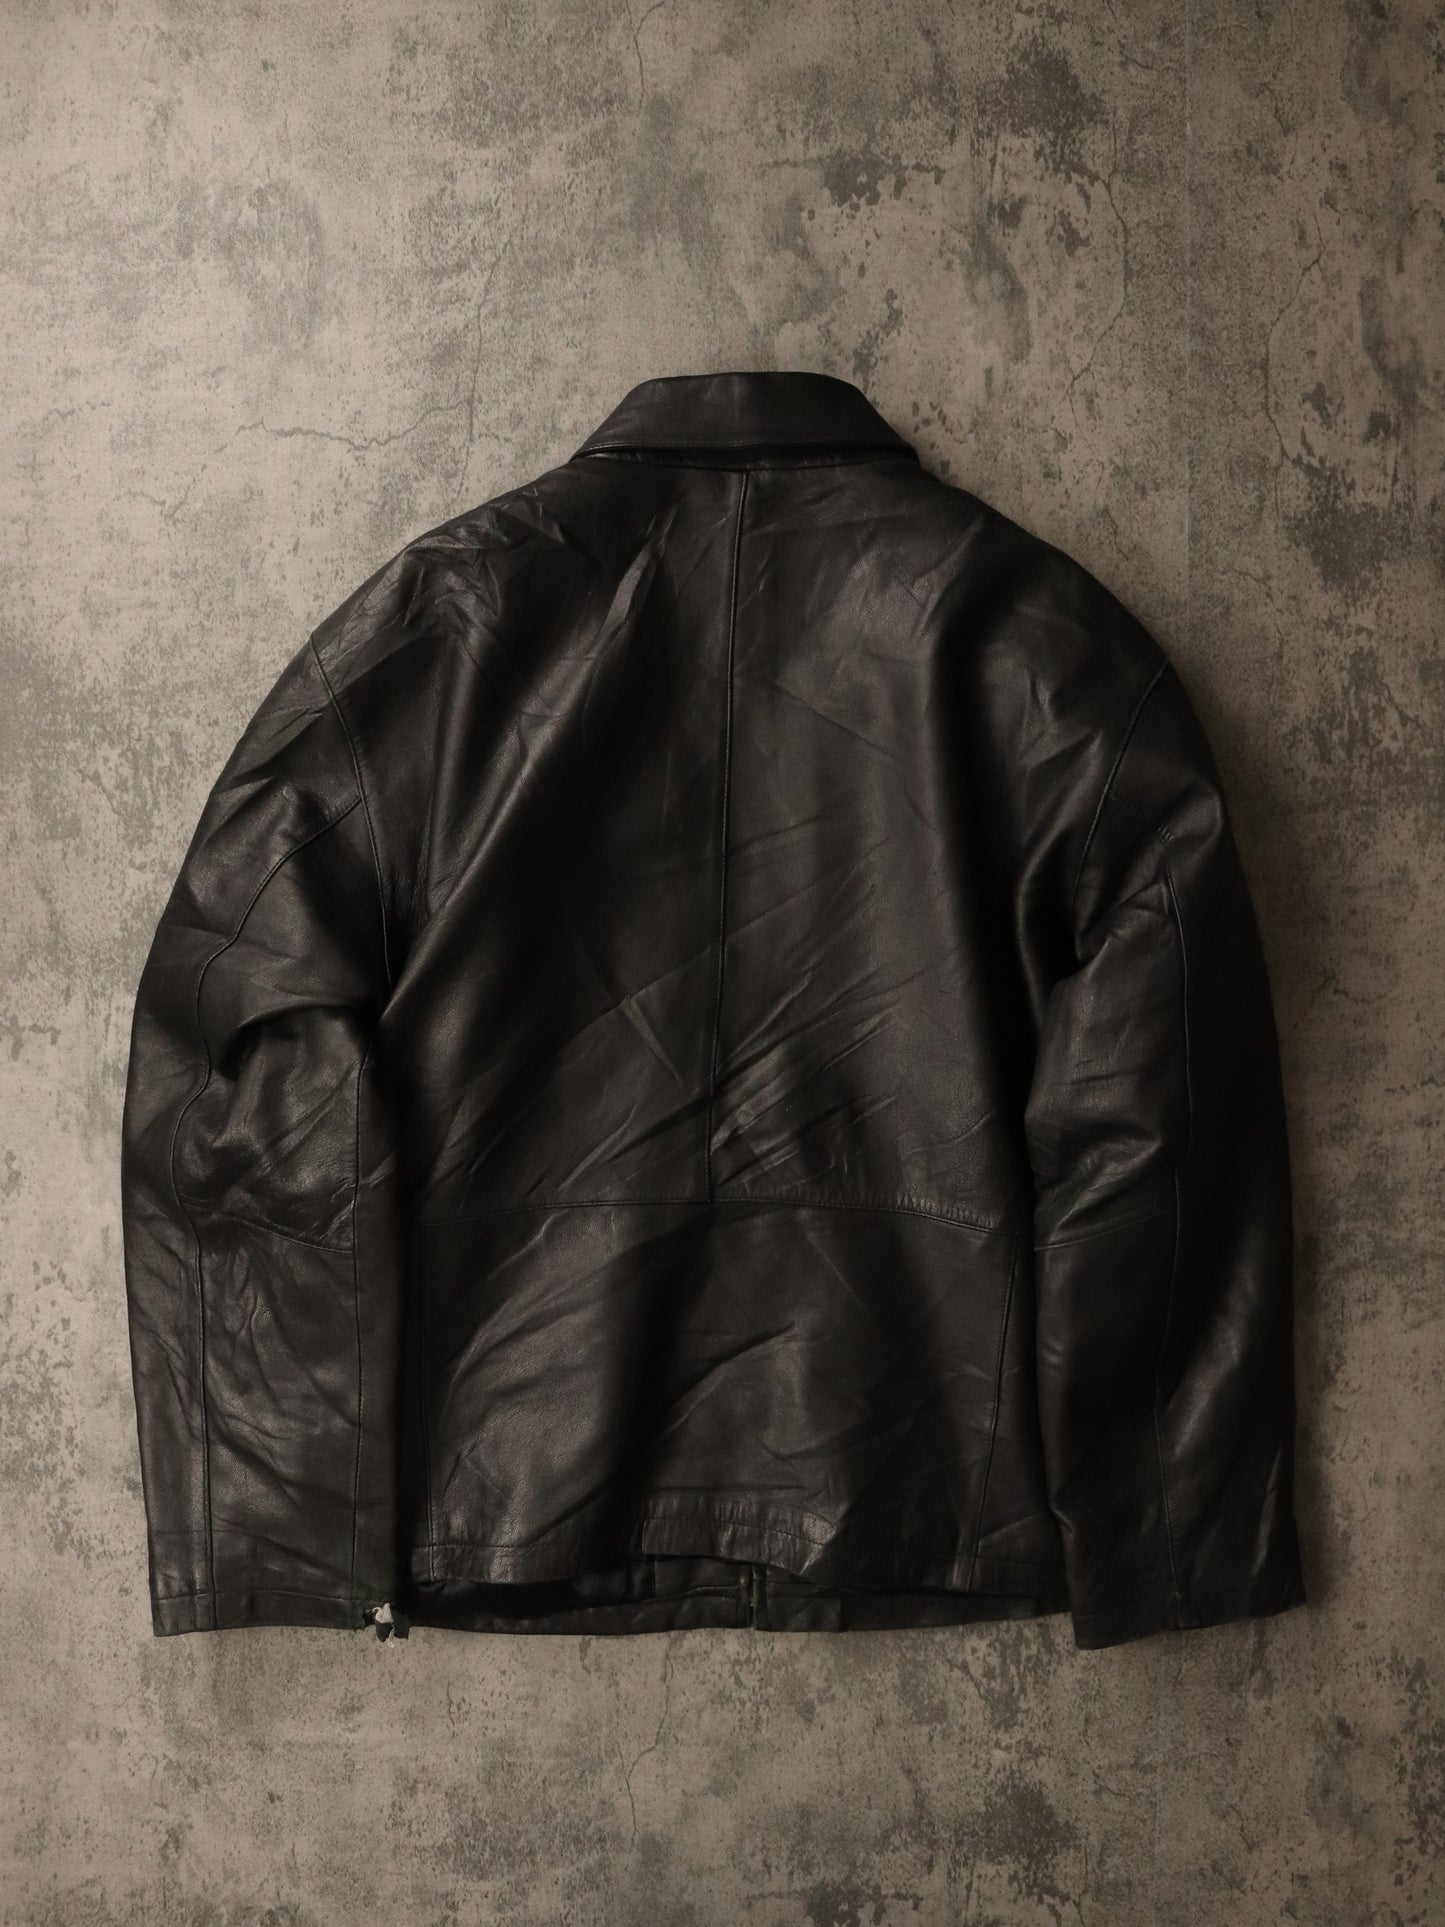 Vintage Knightsbridge Jacket Mens Large Black Leather Coat